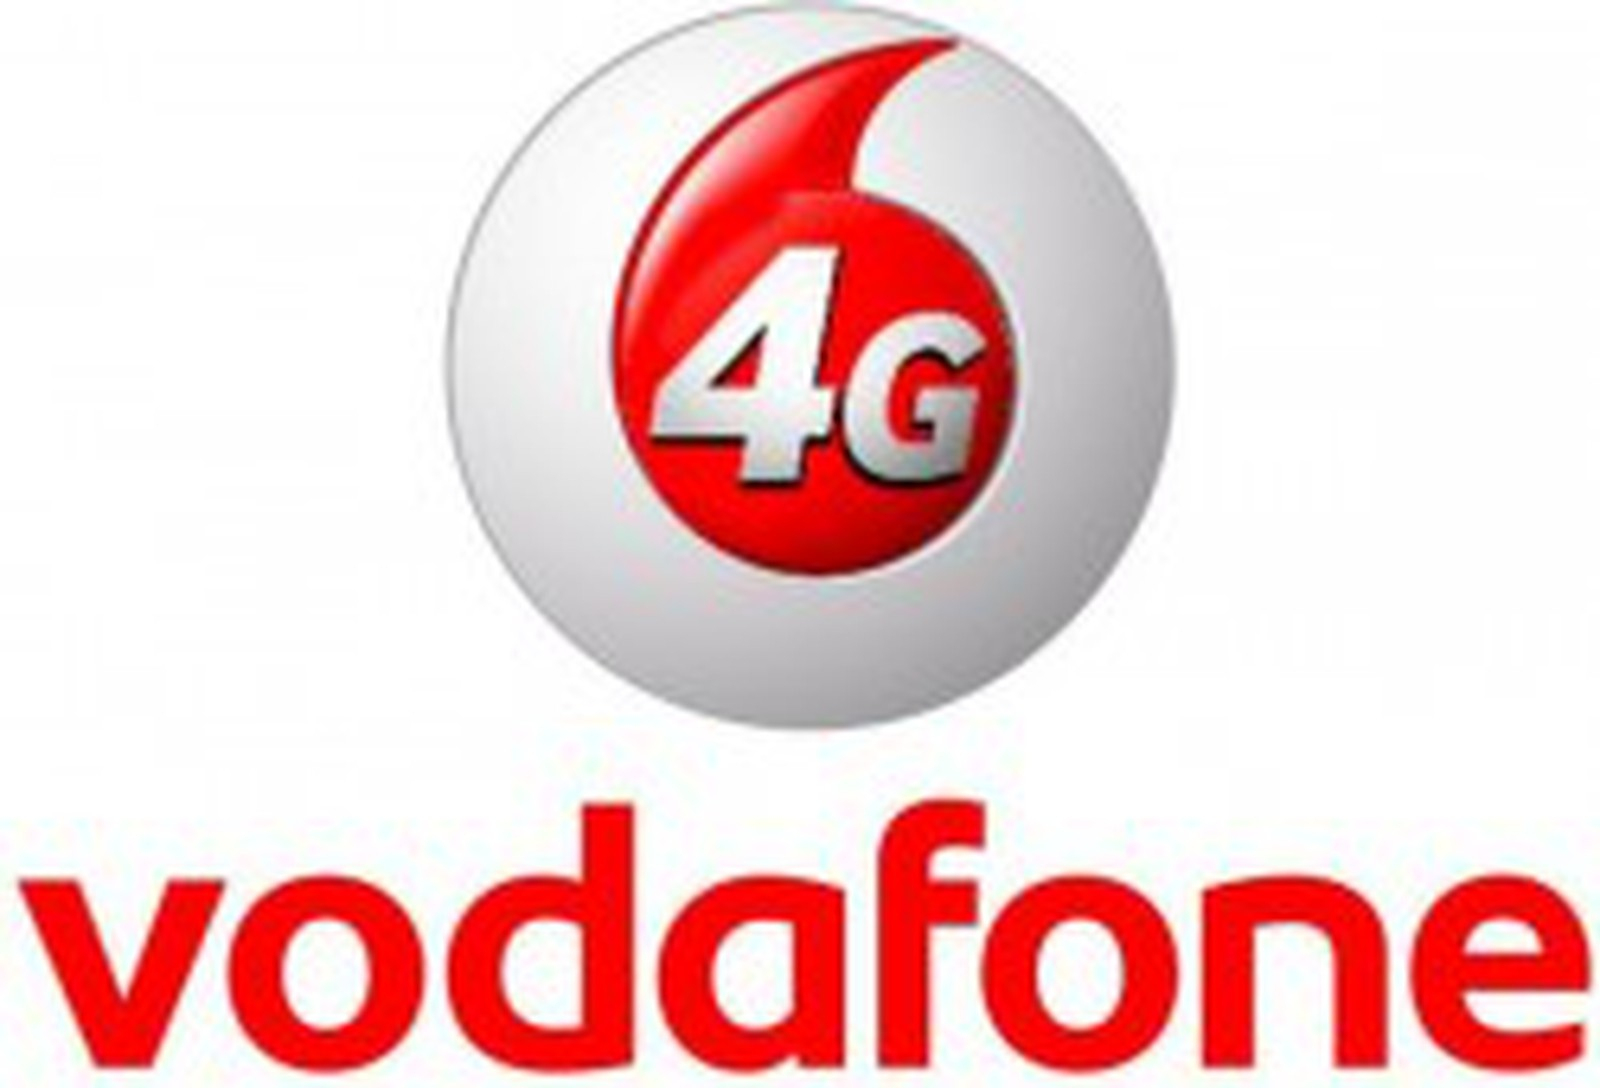 Vodafone Uk Announces 4G Service, Rollout Begins August 29 à Pay At Vodafone Carrier Services 